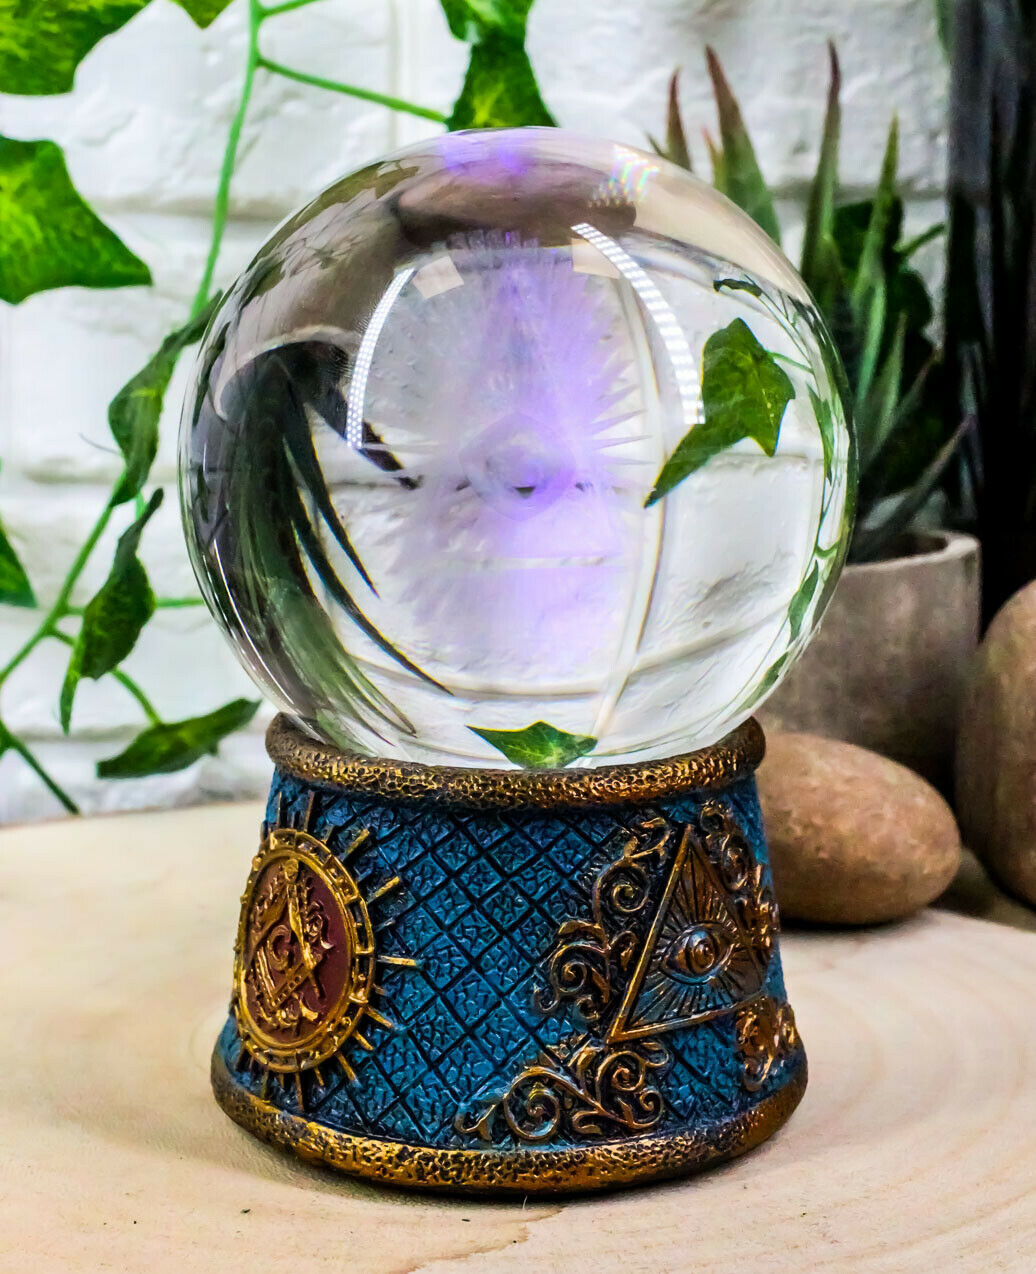 Primary image for Ebros Freemasonry Illuminati Masonic Square and Compasses LED Glass Ball Decor